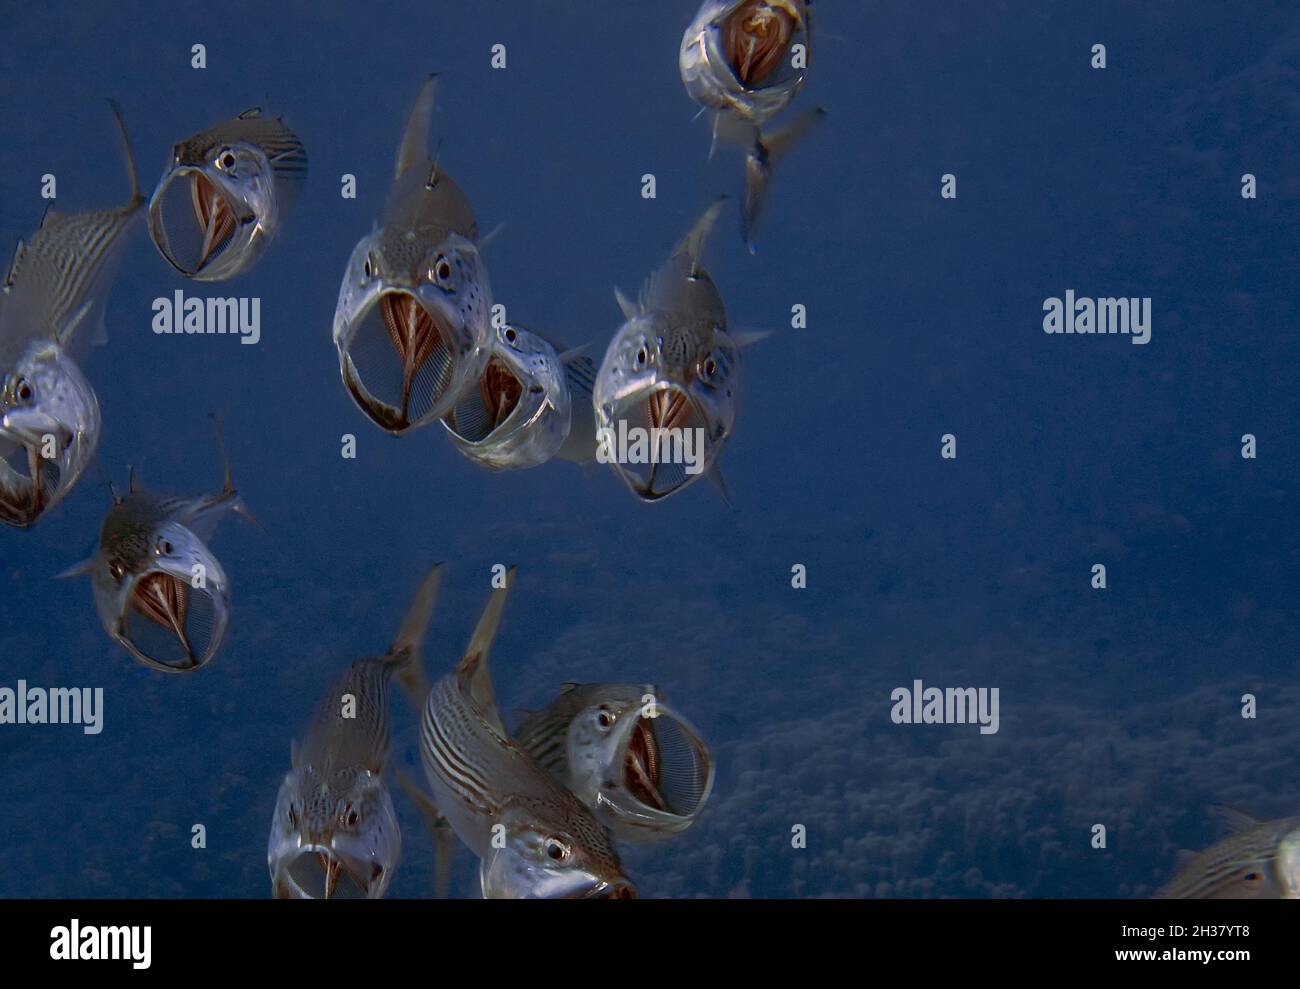 A school of Indian Mackerel (Rastrelliger kanagurta) filter feeding in the Red Sea Stock Photo